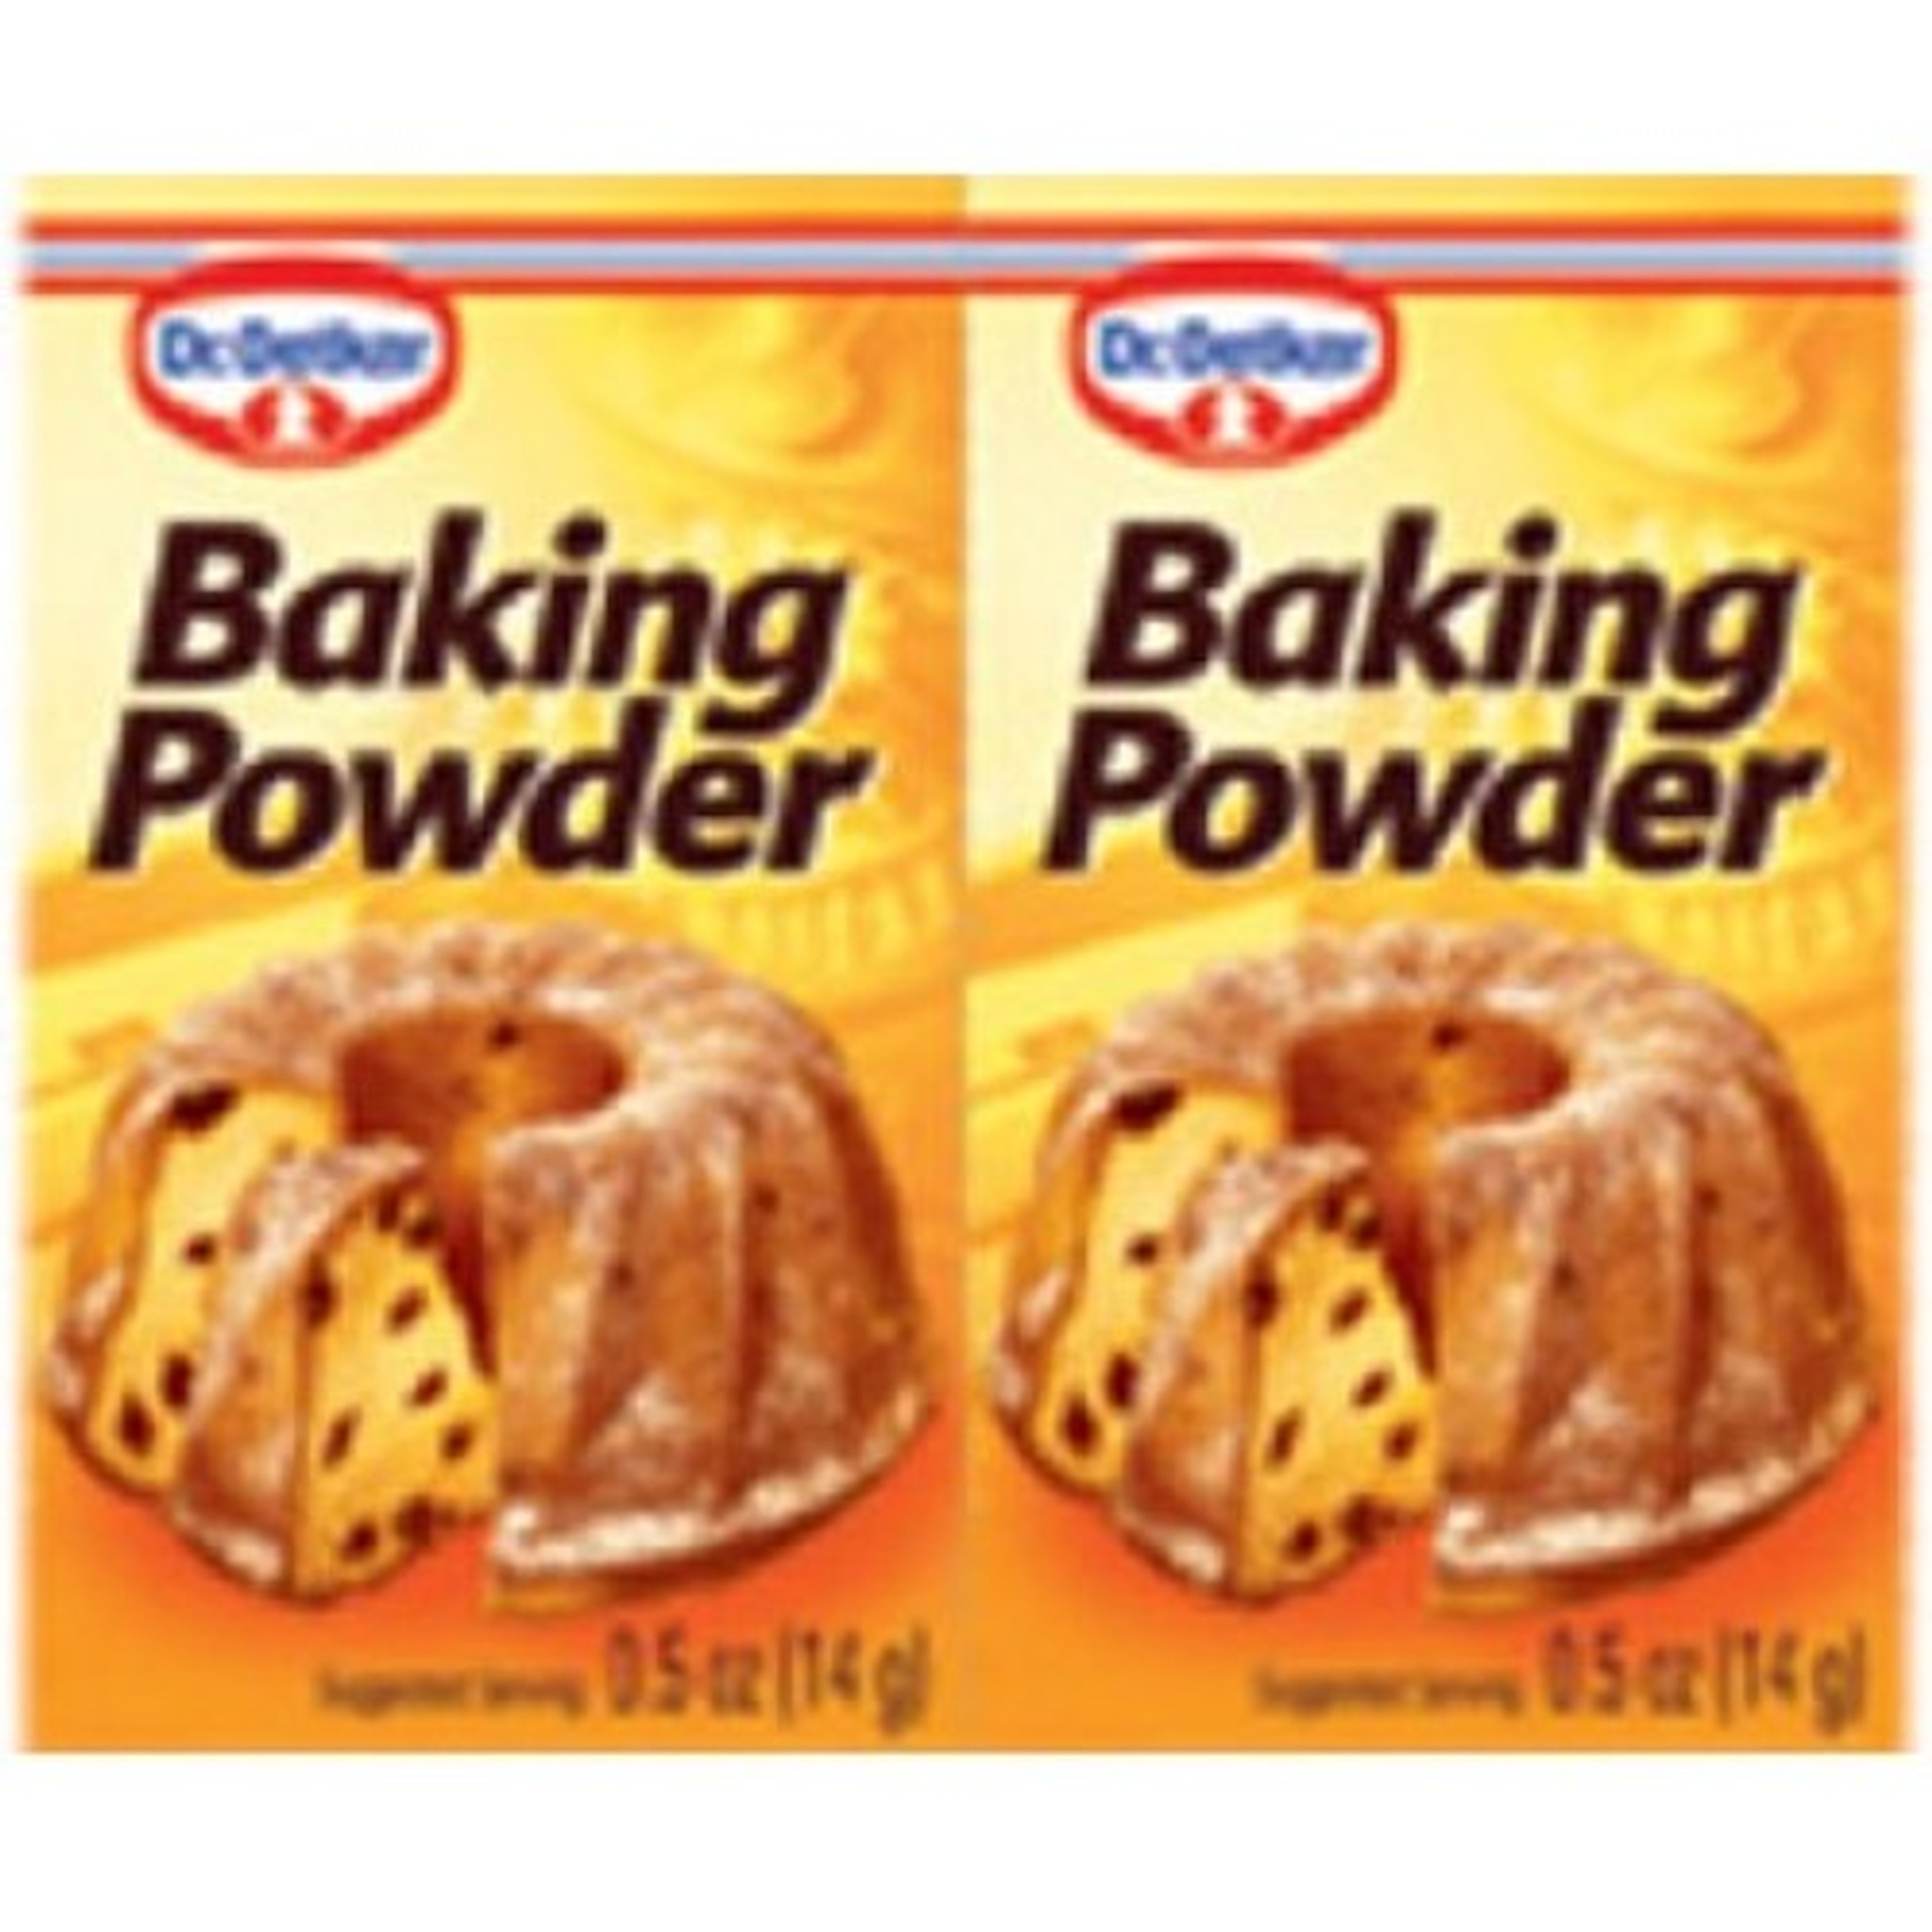 Dr Oetker Baking Powder 6 Packets 5 Oz Per Packet The Taste Of Germany